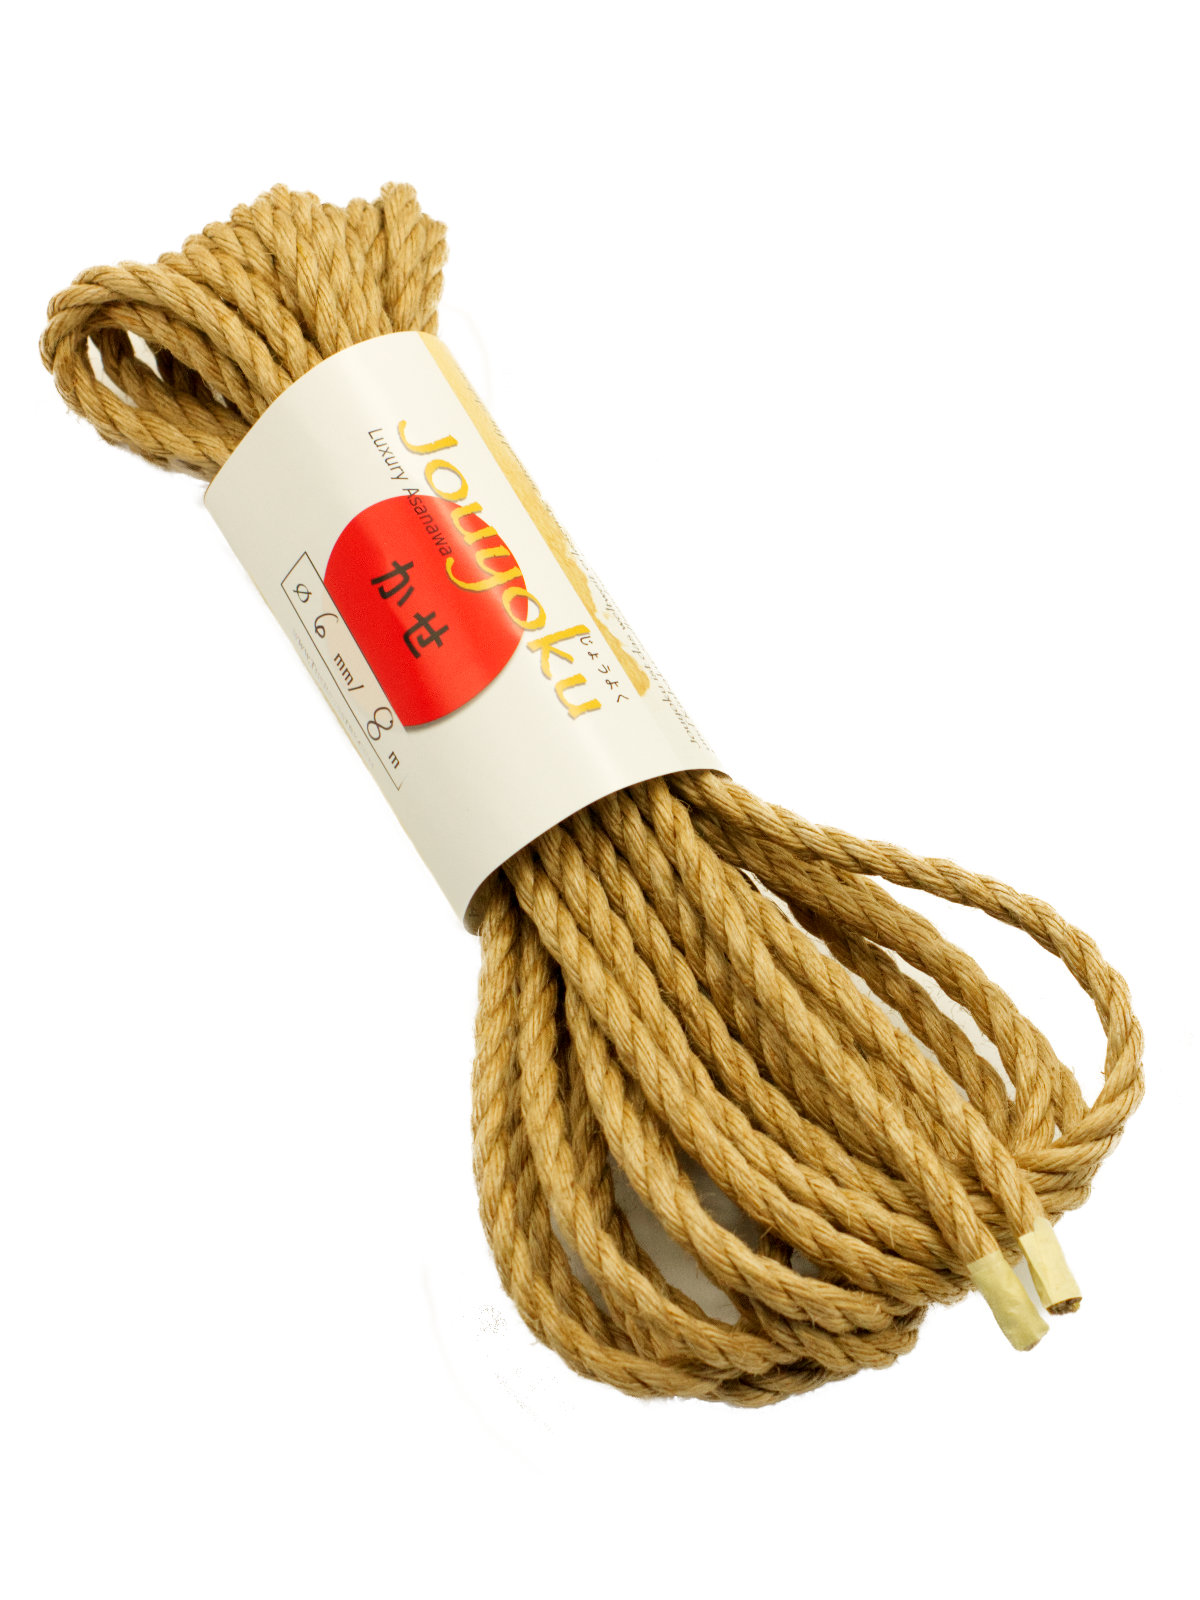 ø 6mm JOUYOKU ready-to-use jute rope for Shibari, Kinbaku bondage, various lengths, new 2023 BATCH!